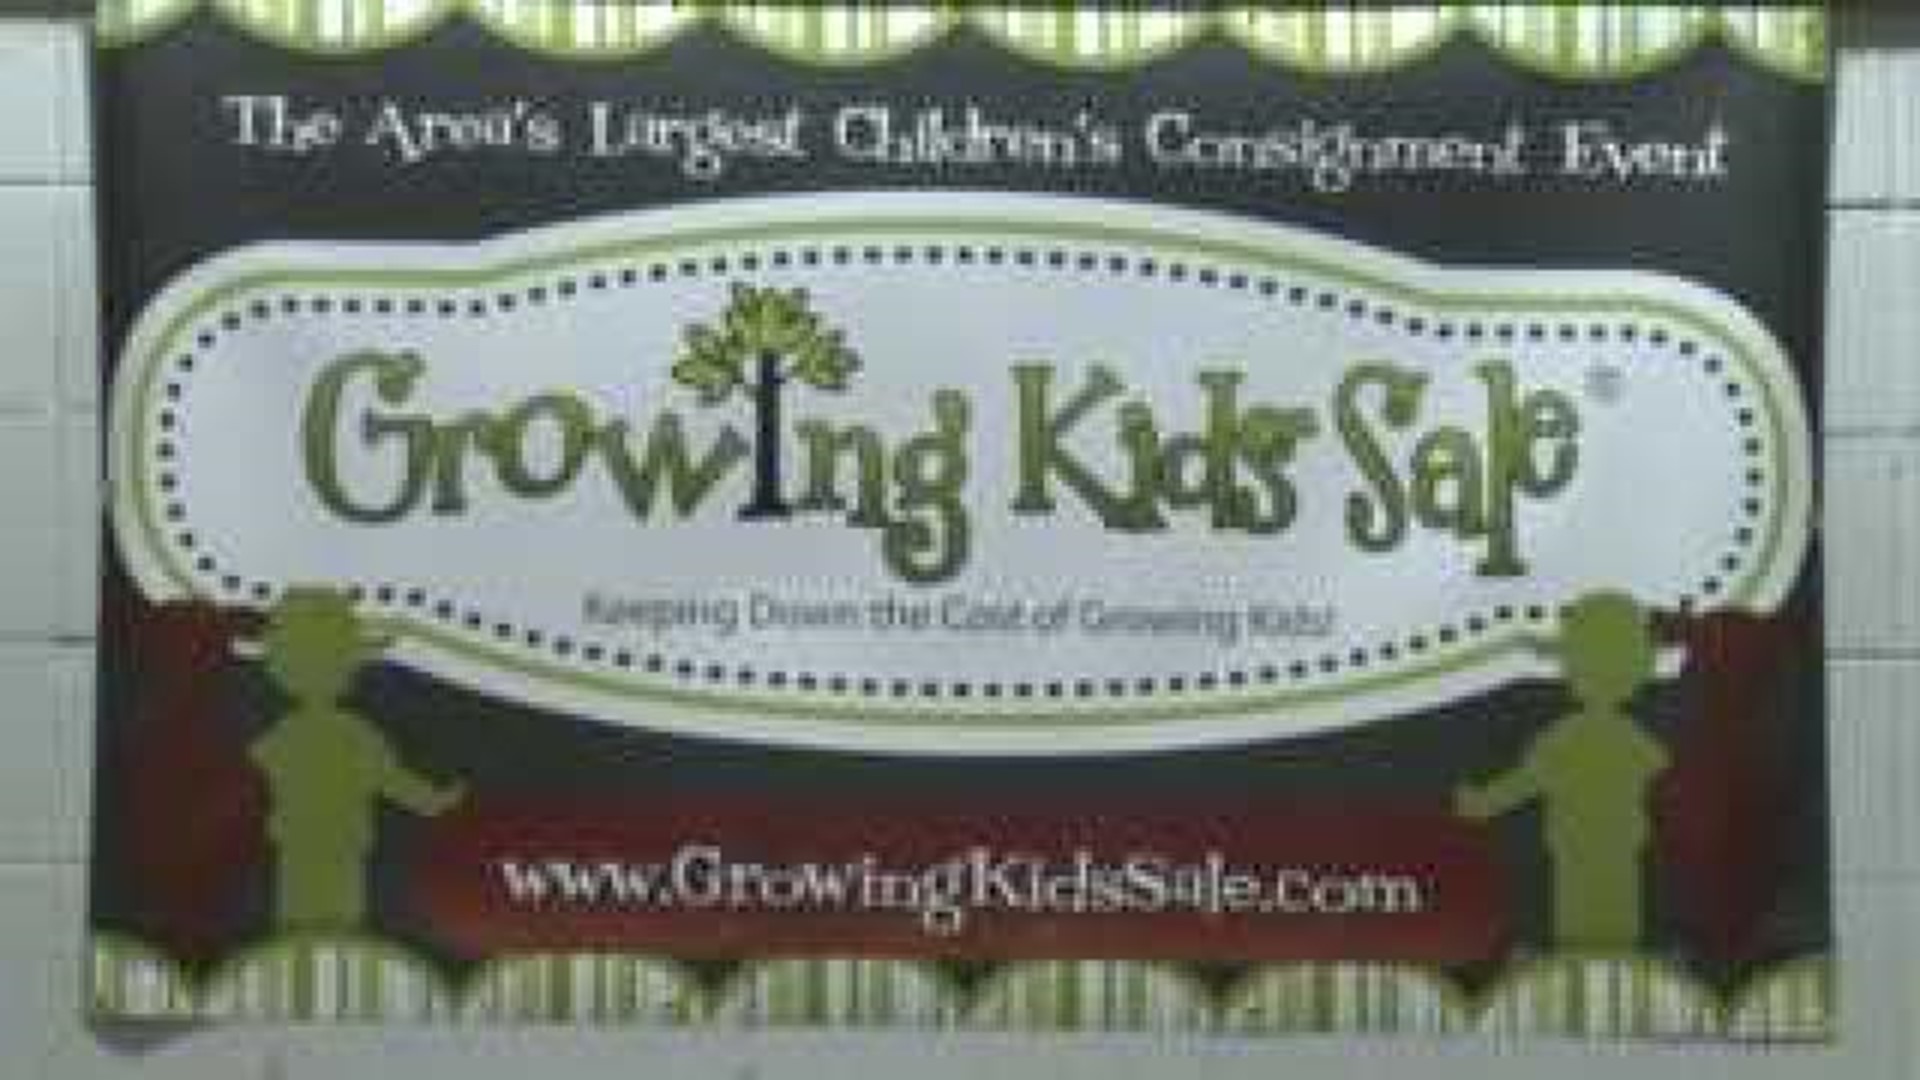 Growing Kids Sale Kicks Off In Fort Smith